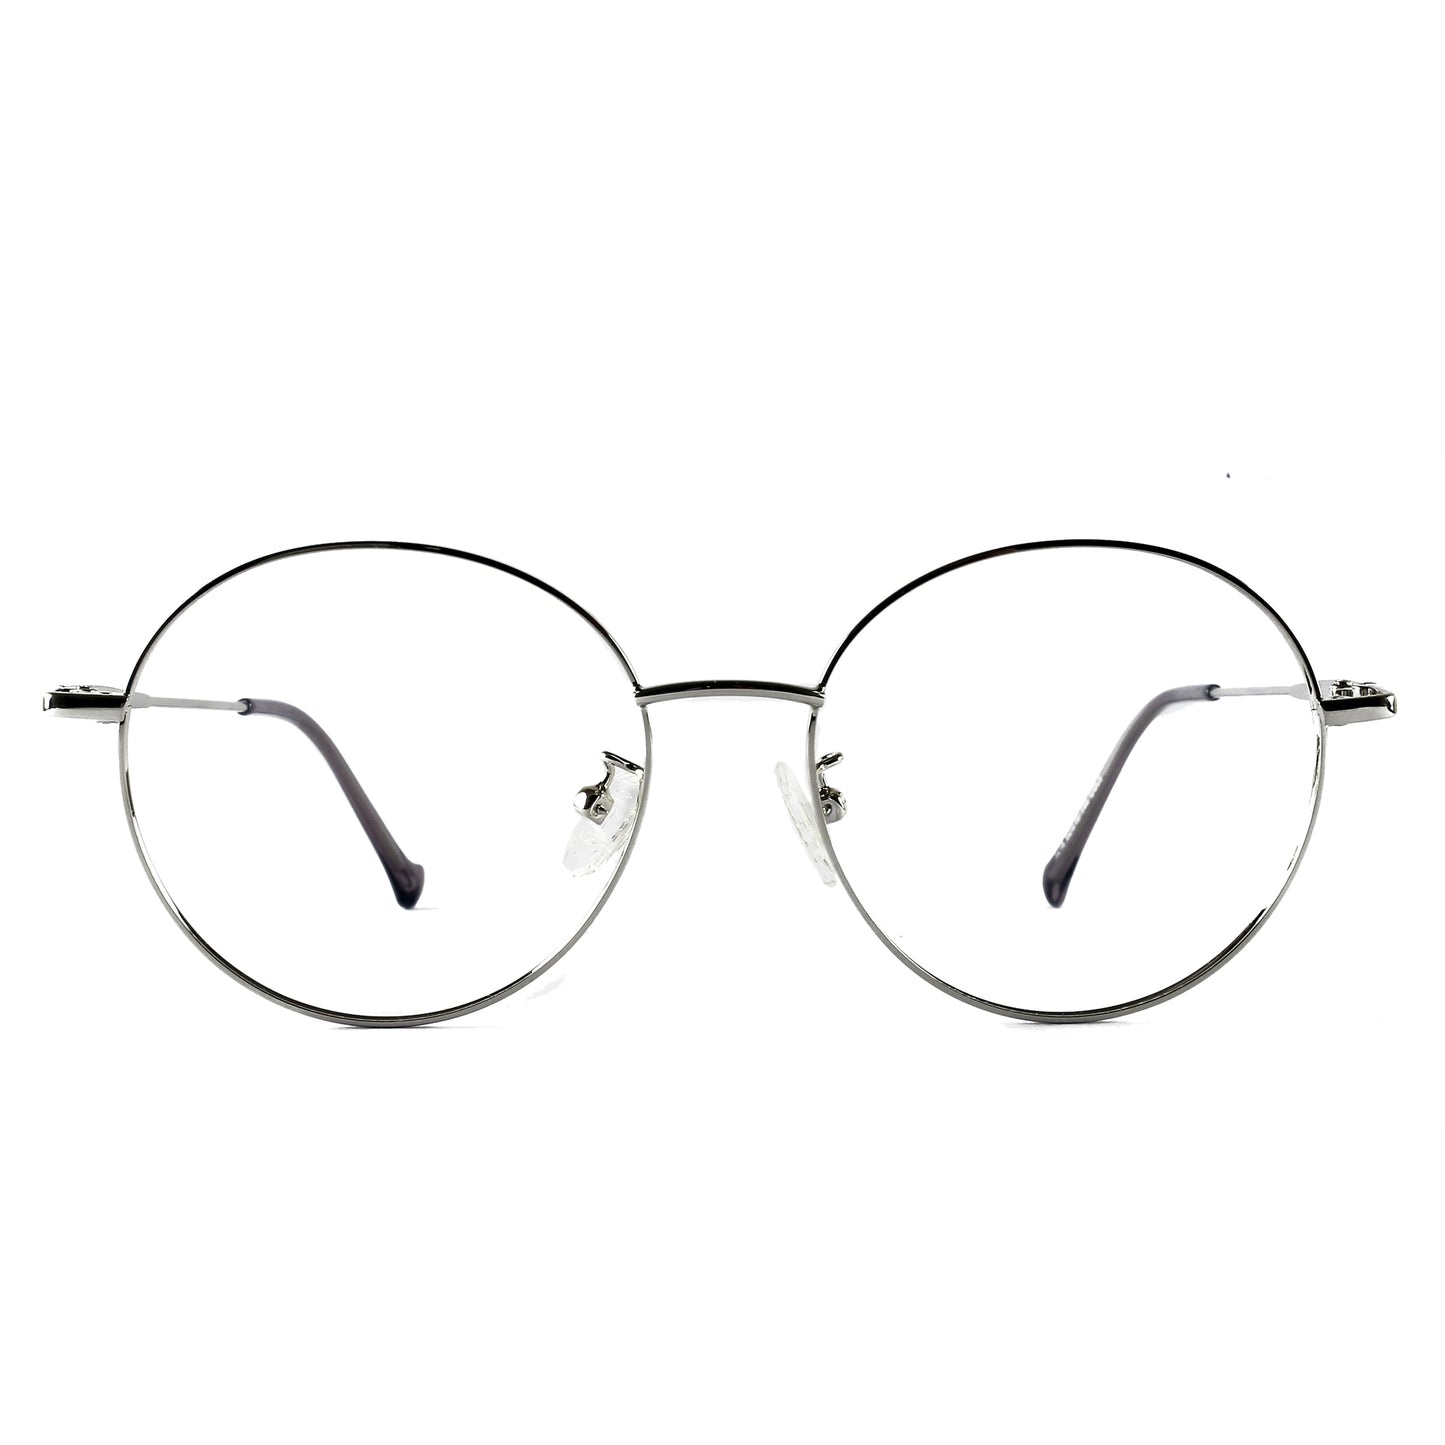 Loscomun Computer Glasses Silver Round Eyeglasses